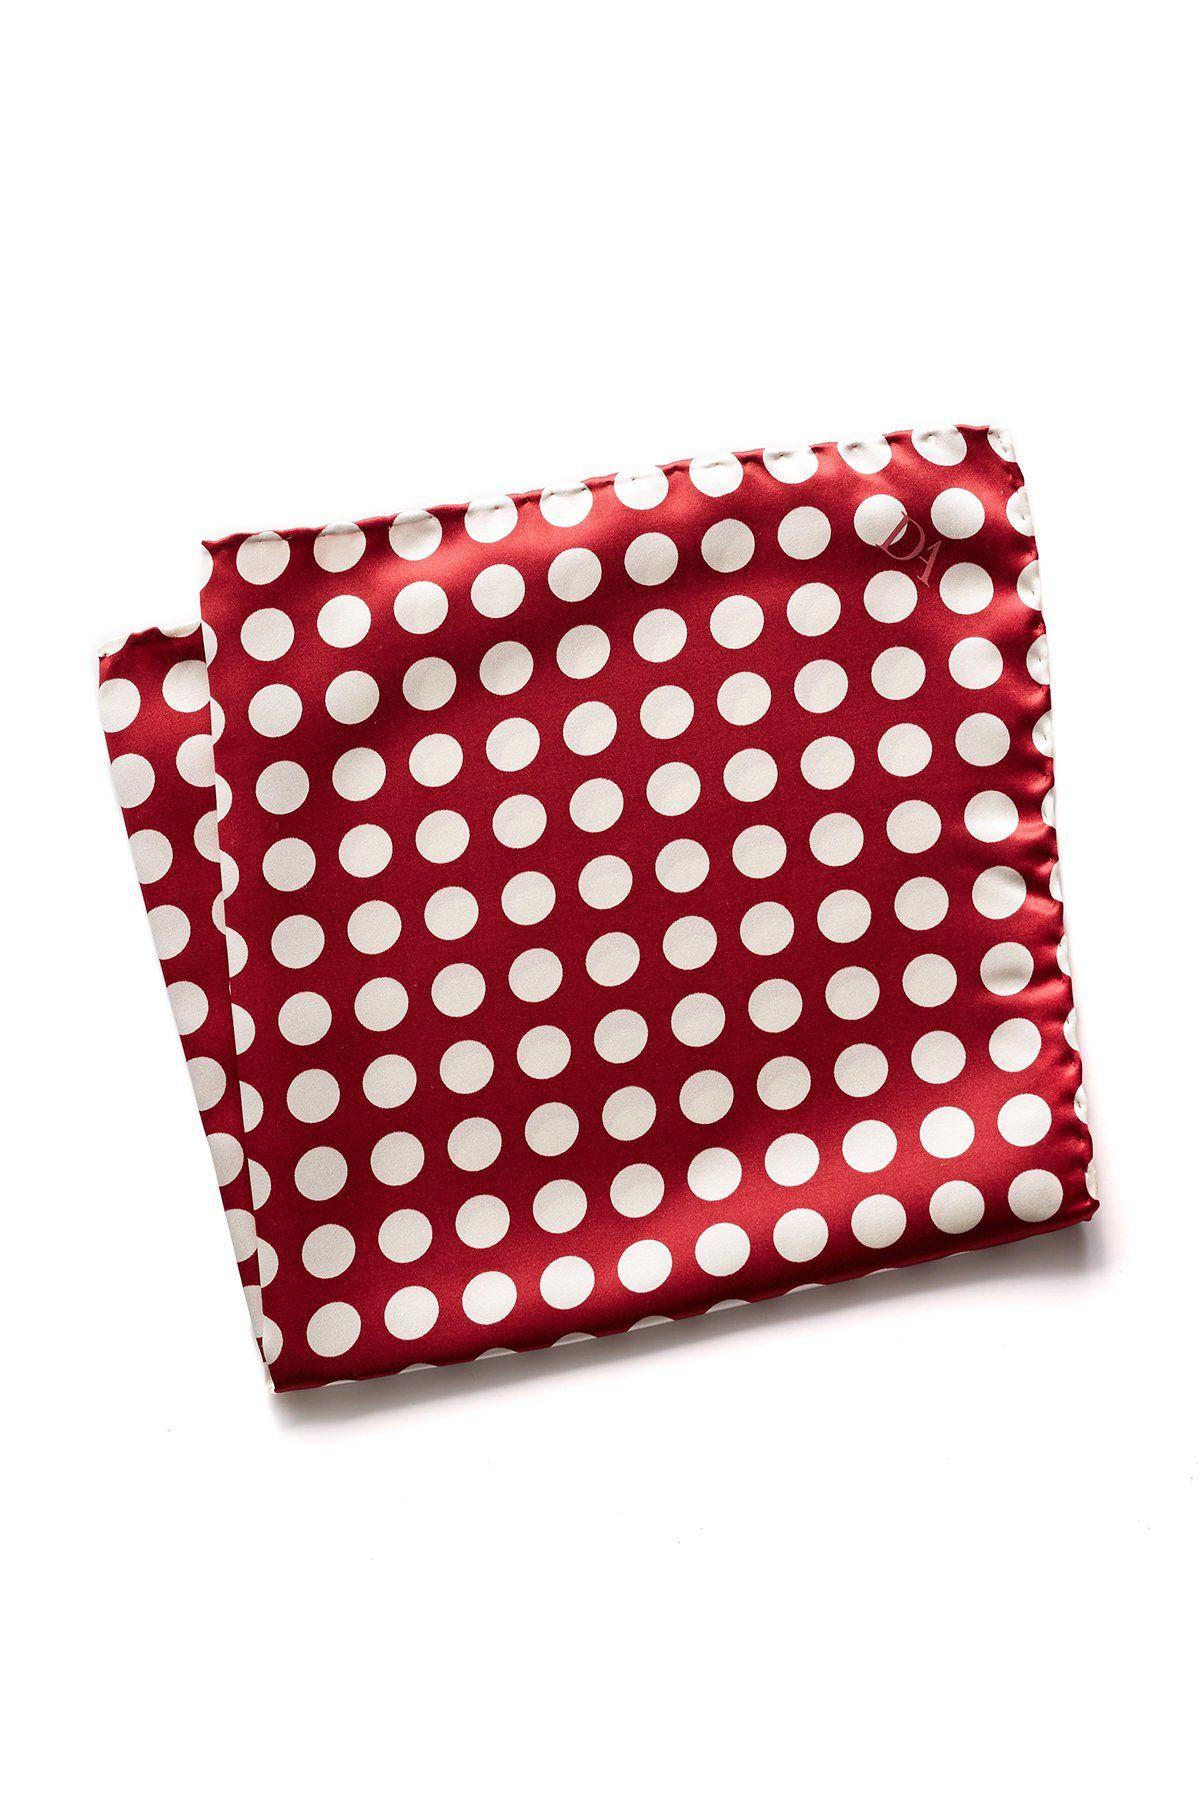 Italian Red White Square Logo - David August Red with White Polka-Dot Italian Silk Pocket Square ...